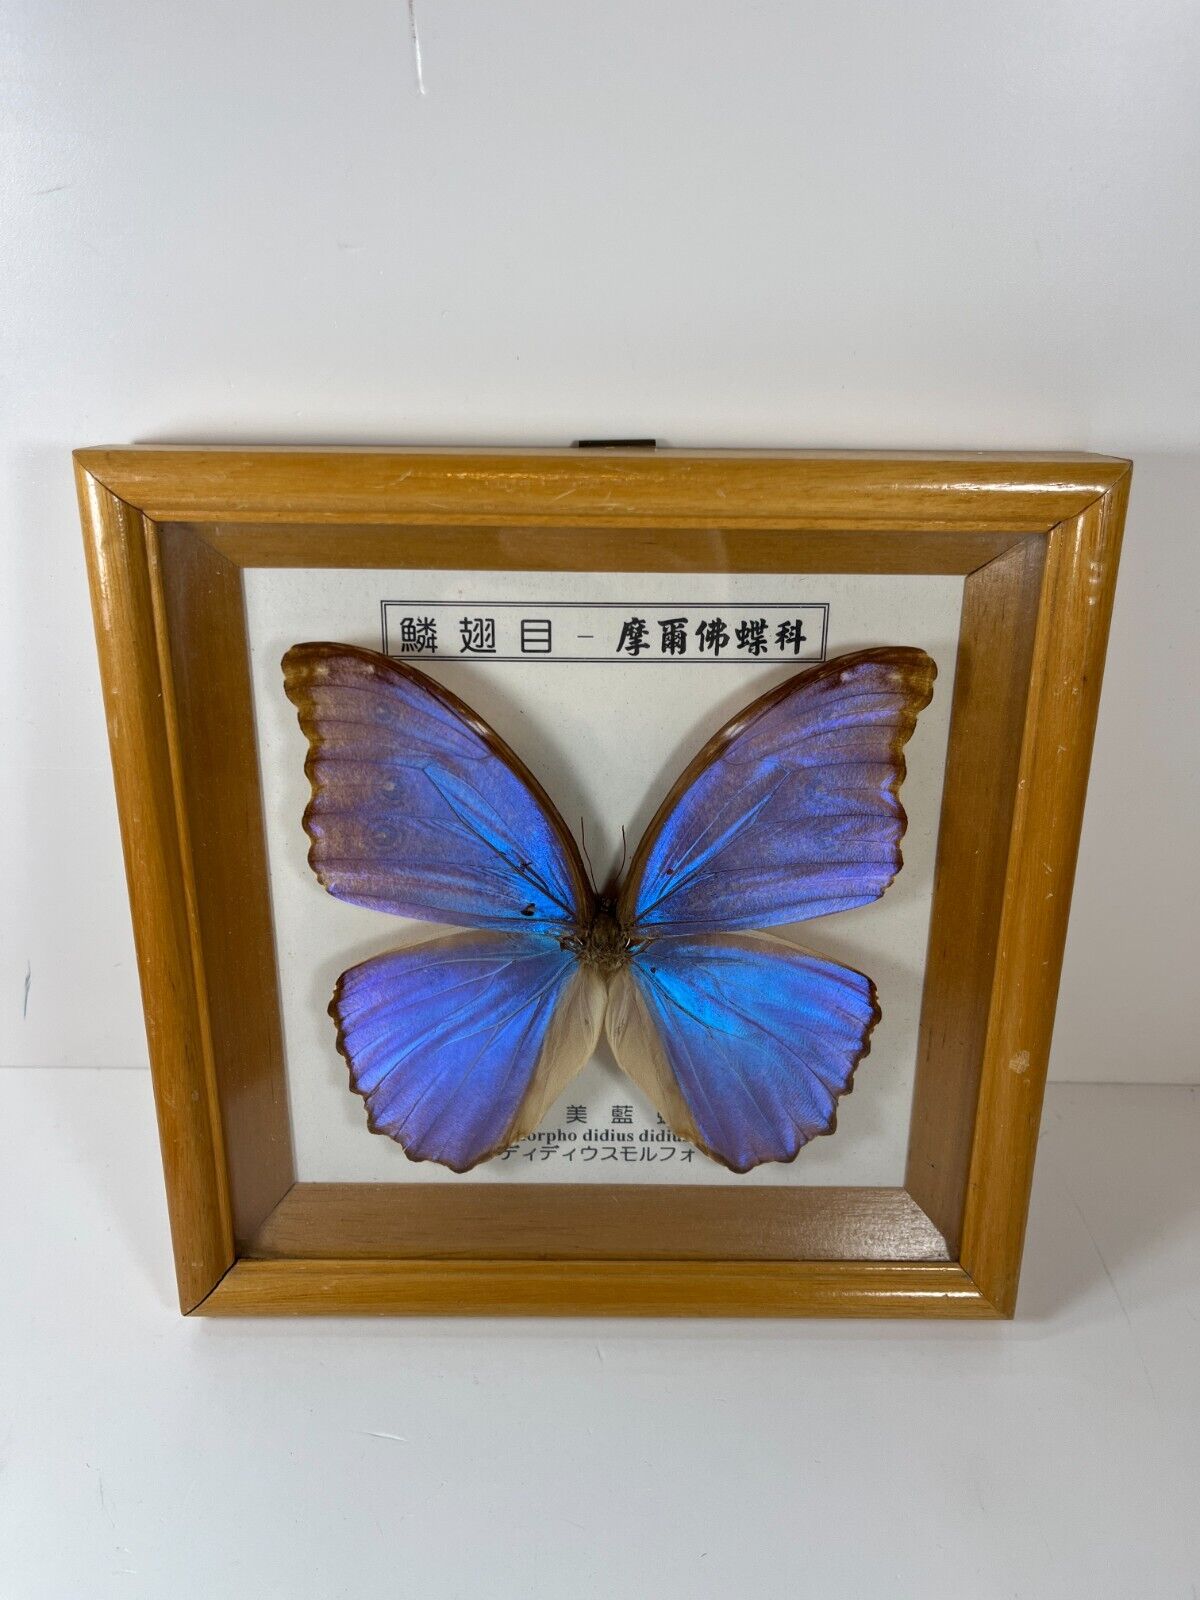 Real Framed Blue Morpho Didius Didius Purple  Butterfly 8x6 Riker Mount Chinese